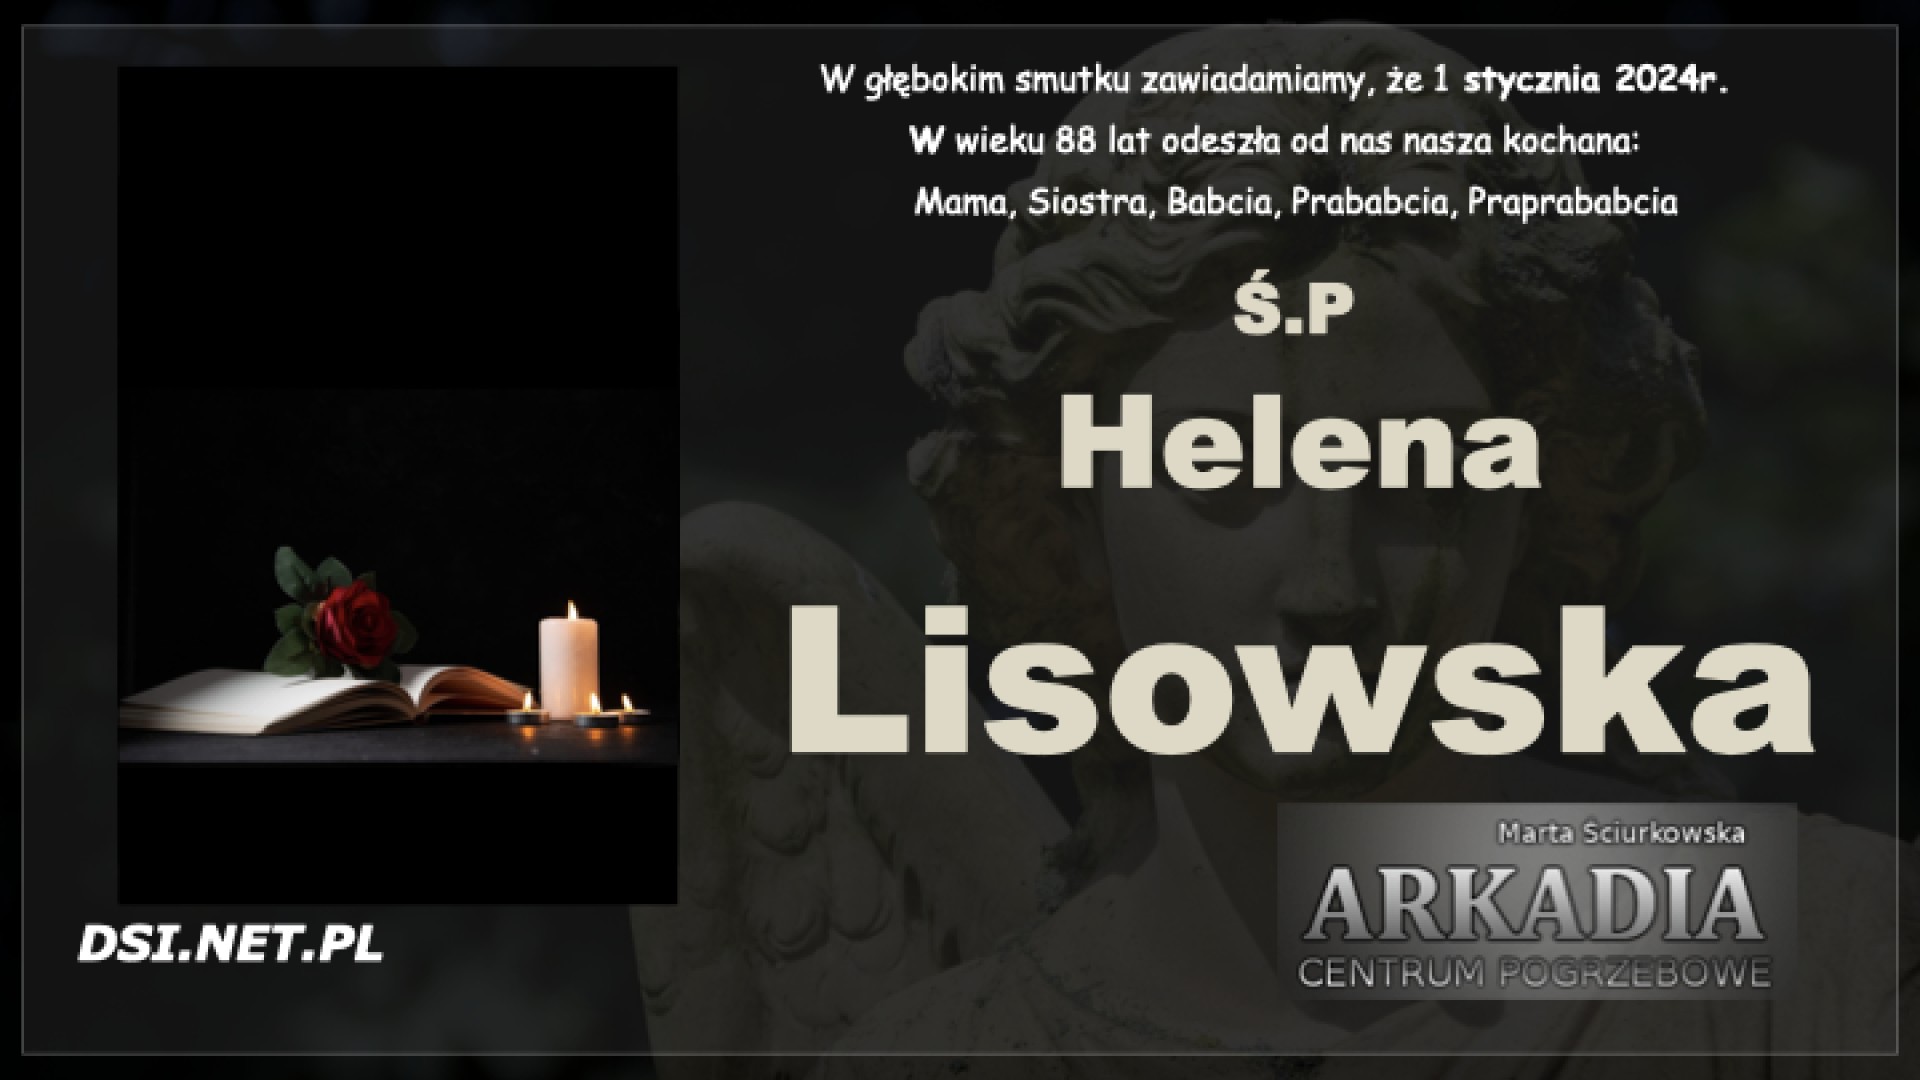 Ś.P. Helena Lisowska